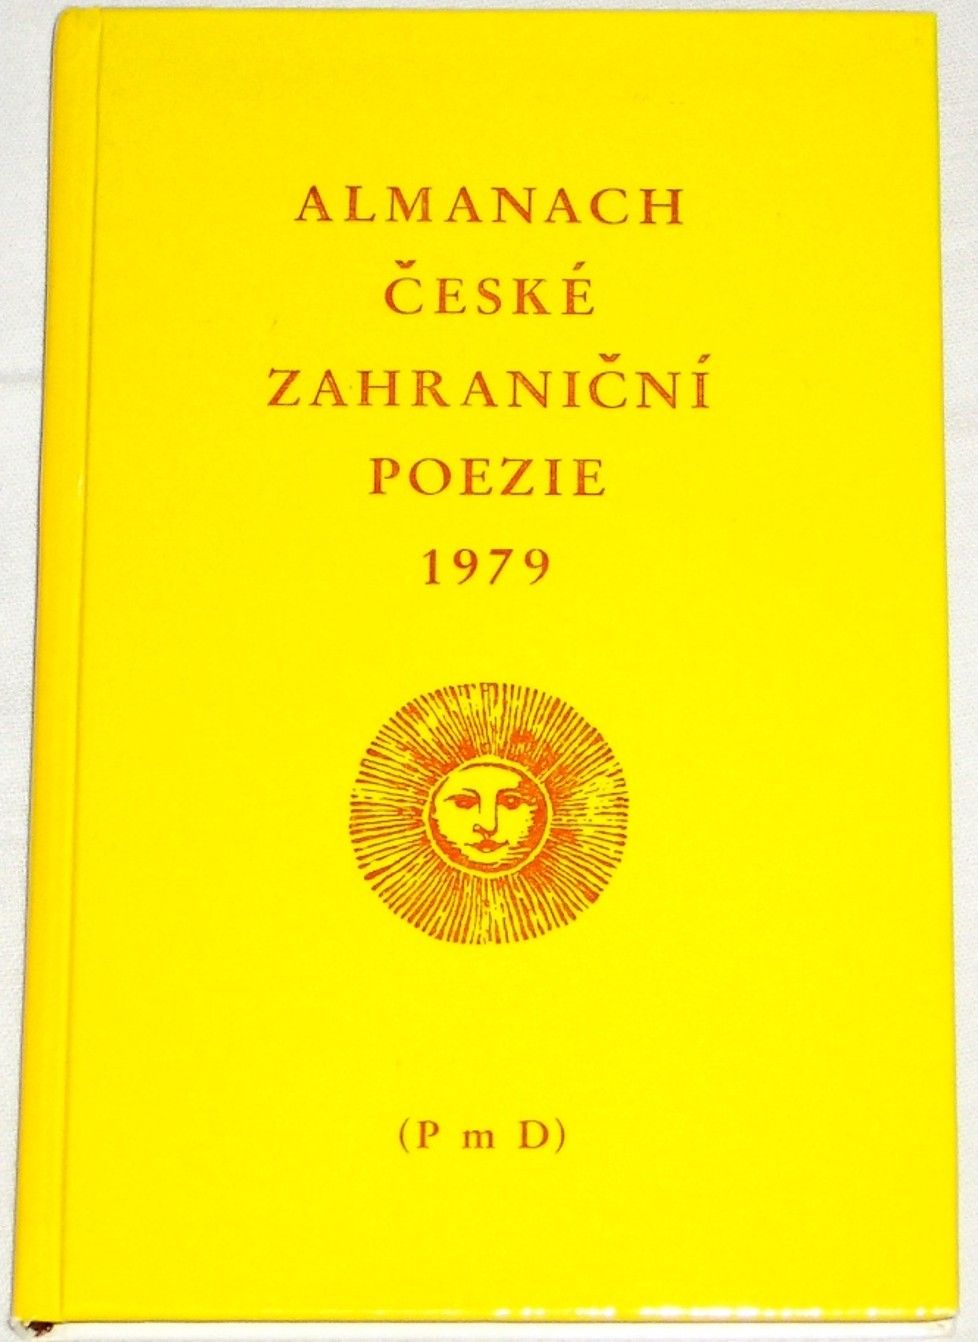 Strož Daniel - Almanach české poezie 1979